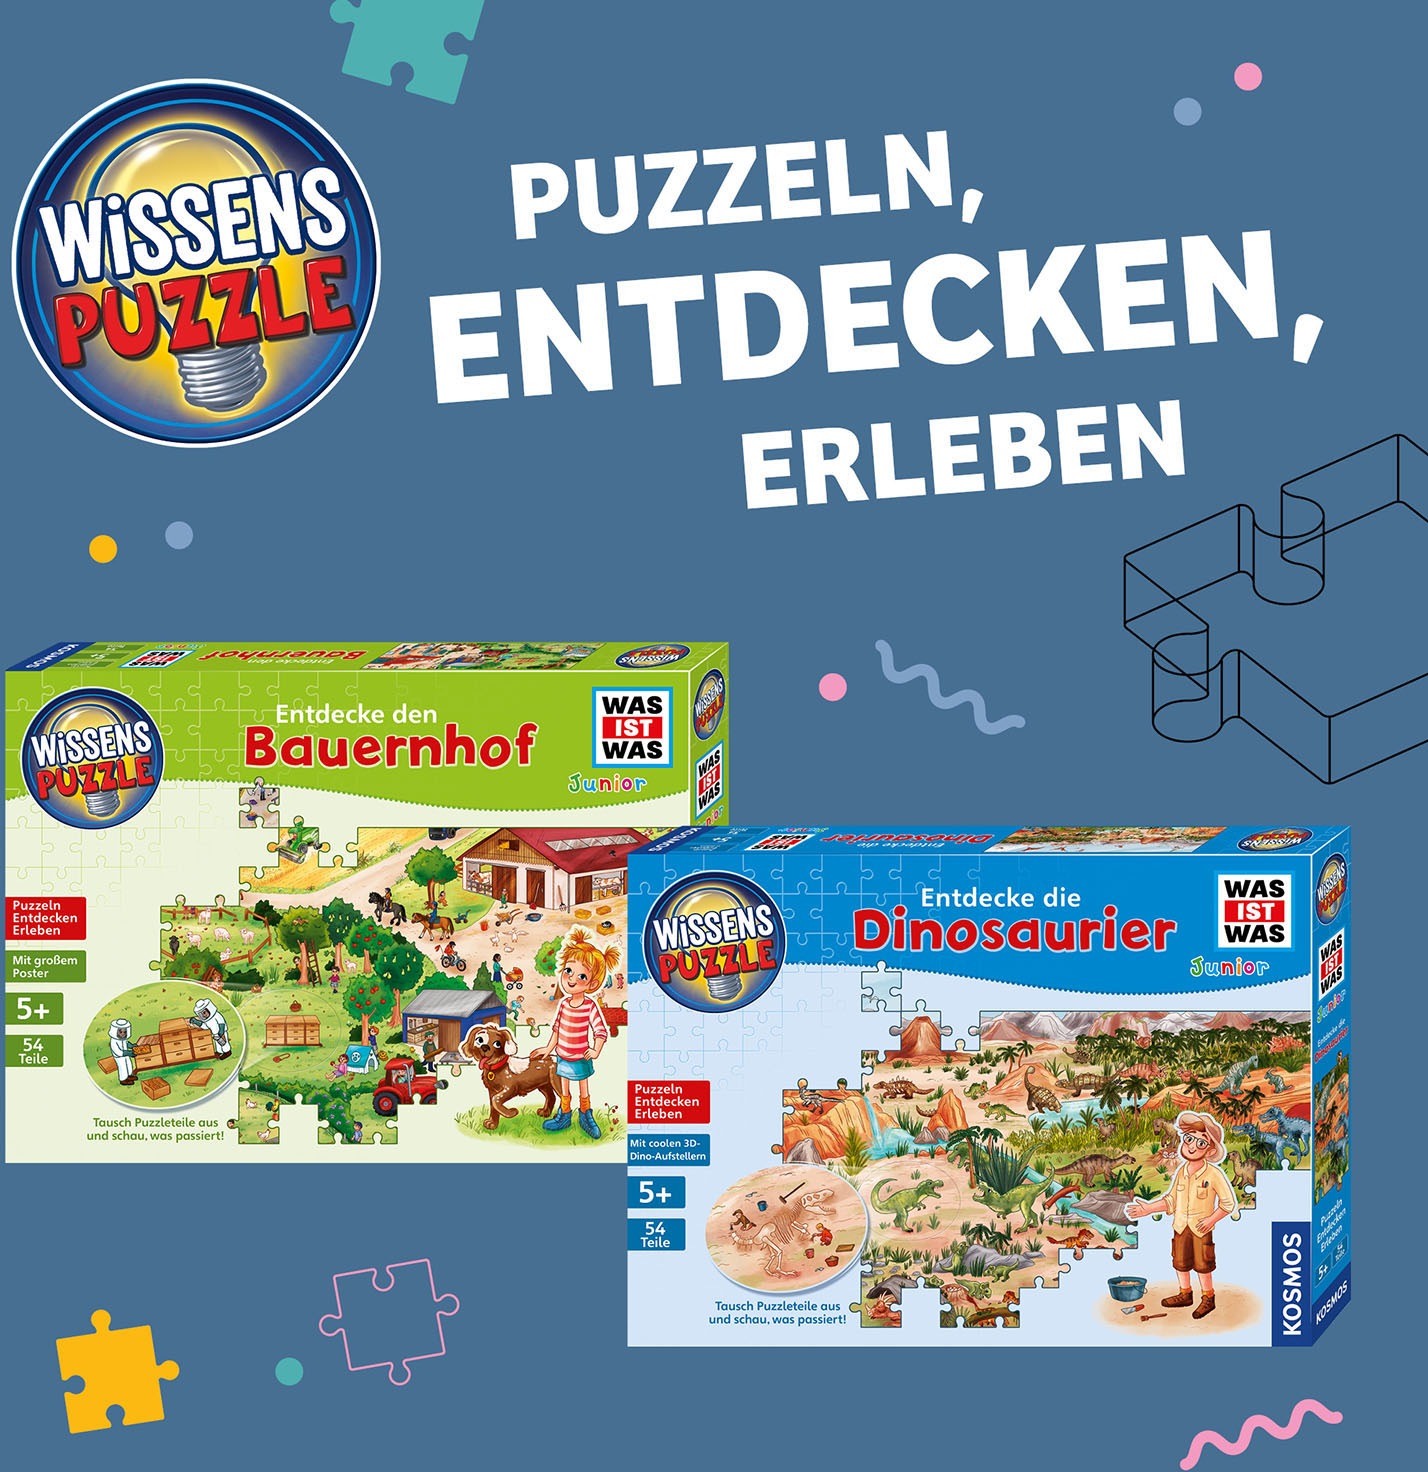 Kosmos Puzzle »WAS IST WAS Junior, Entdecke die Dinosaurier«, Made in Germany